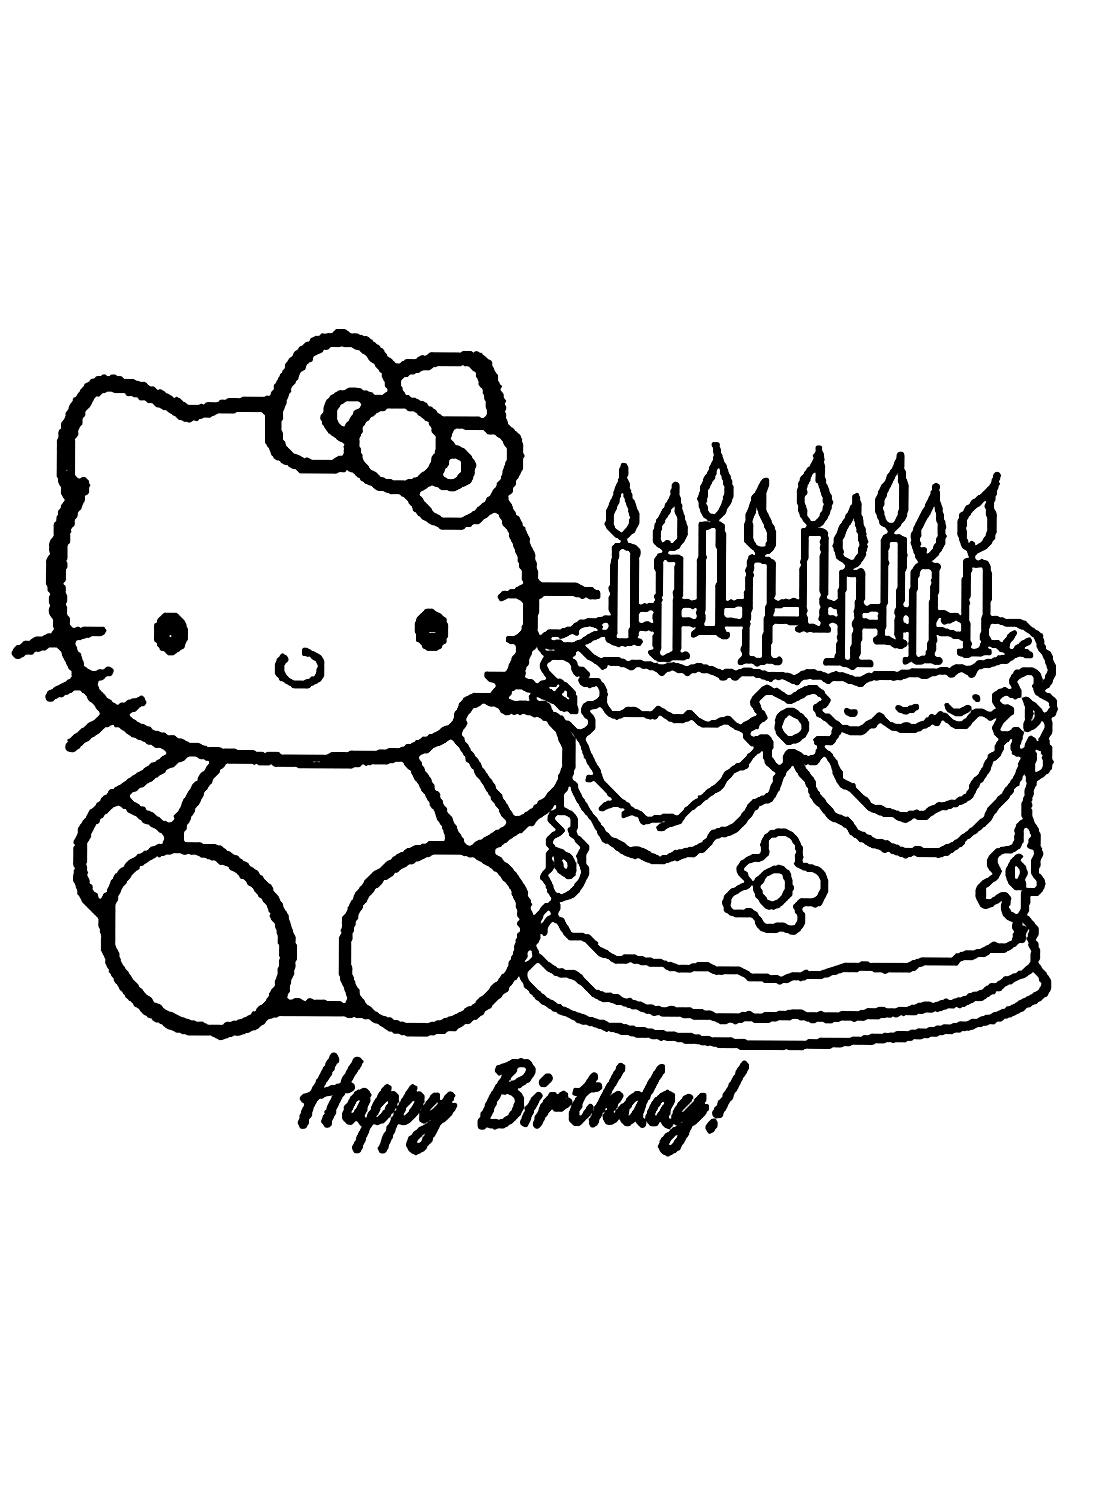 Поздравление с днем ​​рождения Hello Kitty от Hello Kitty